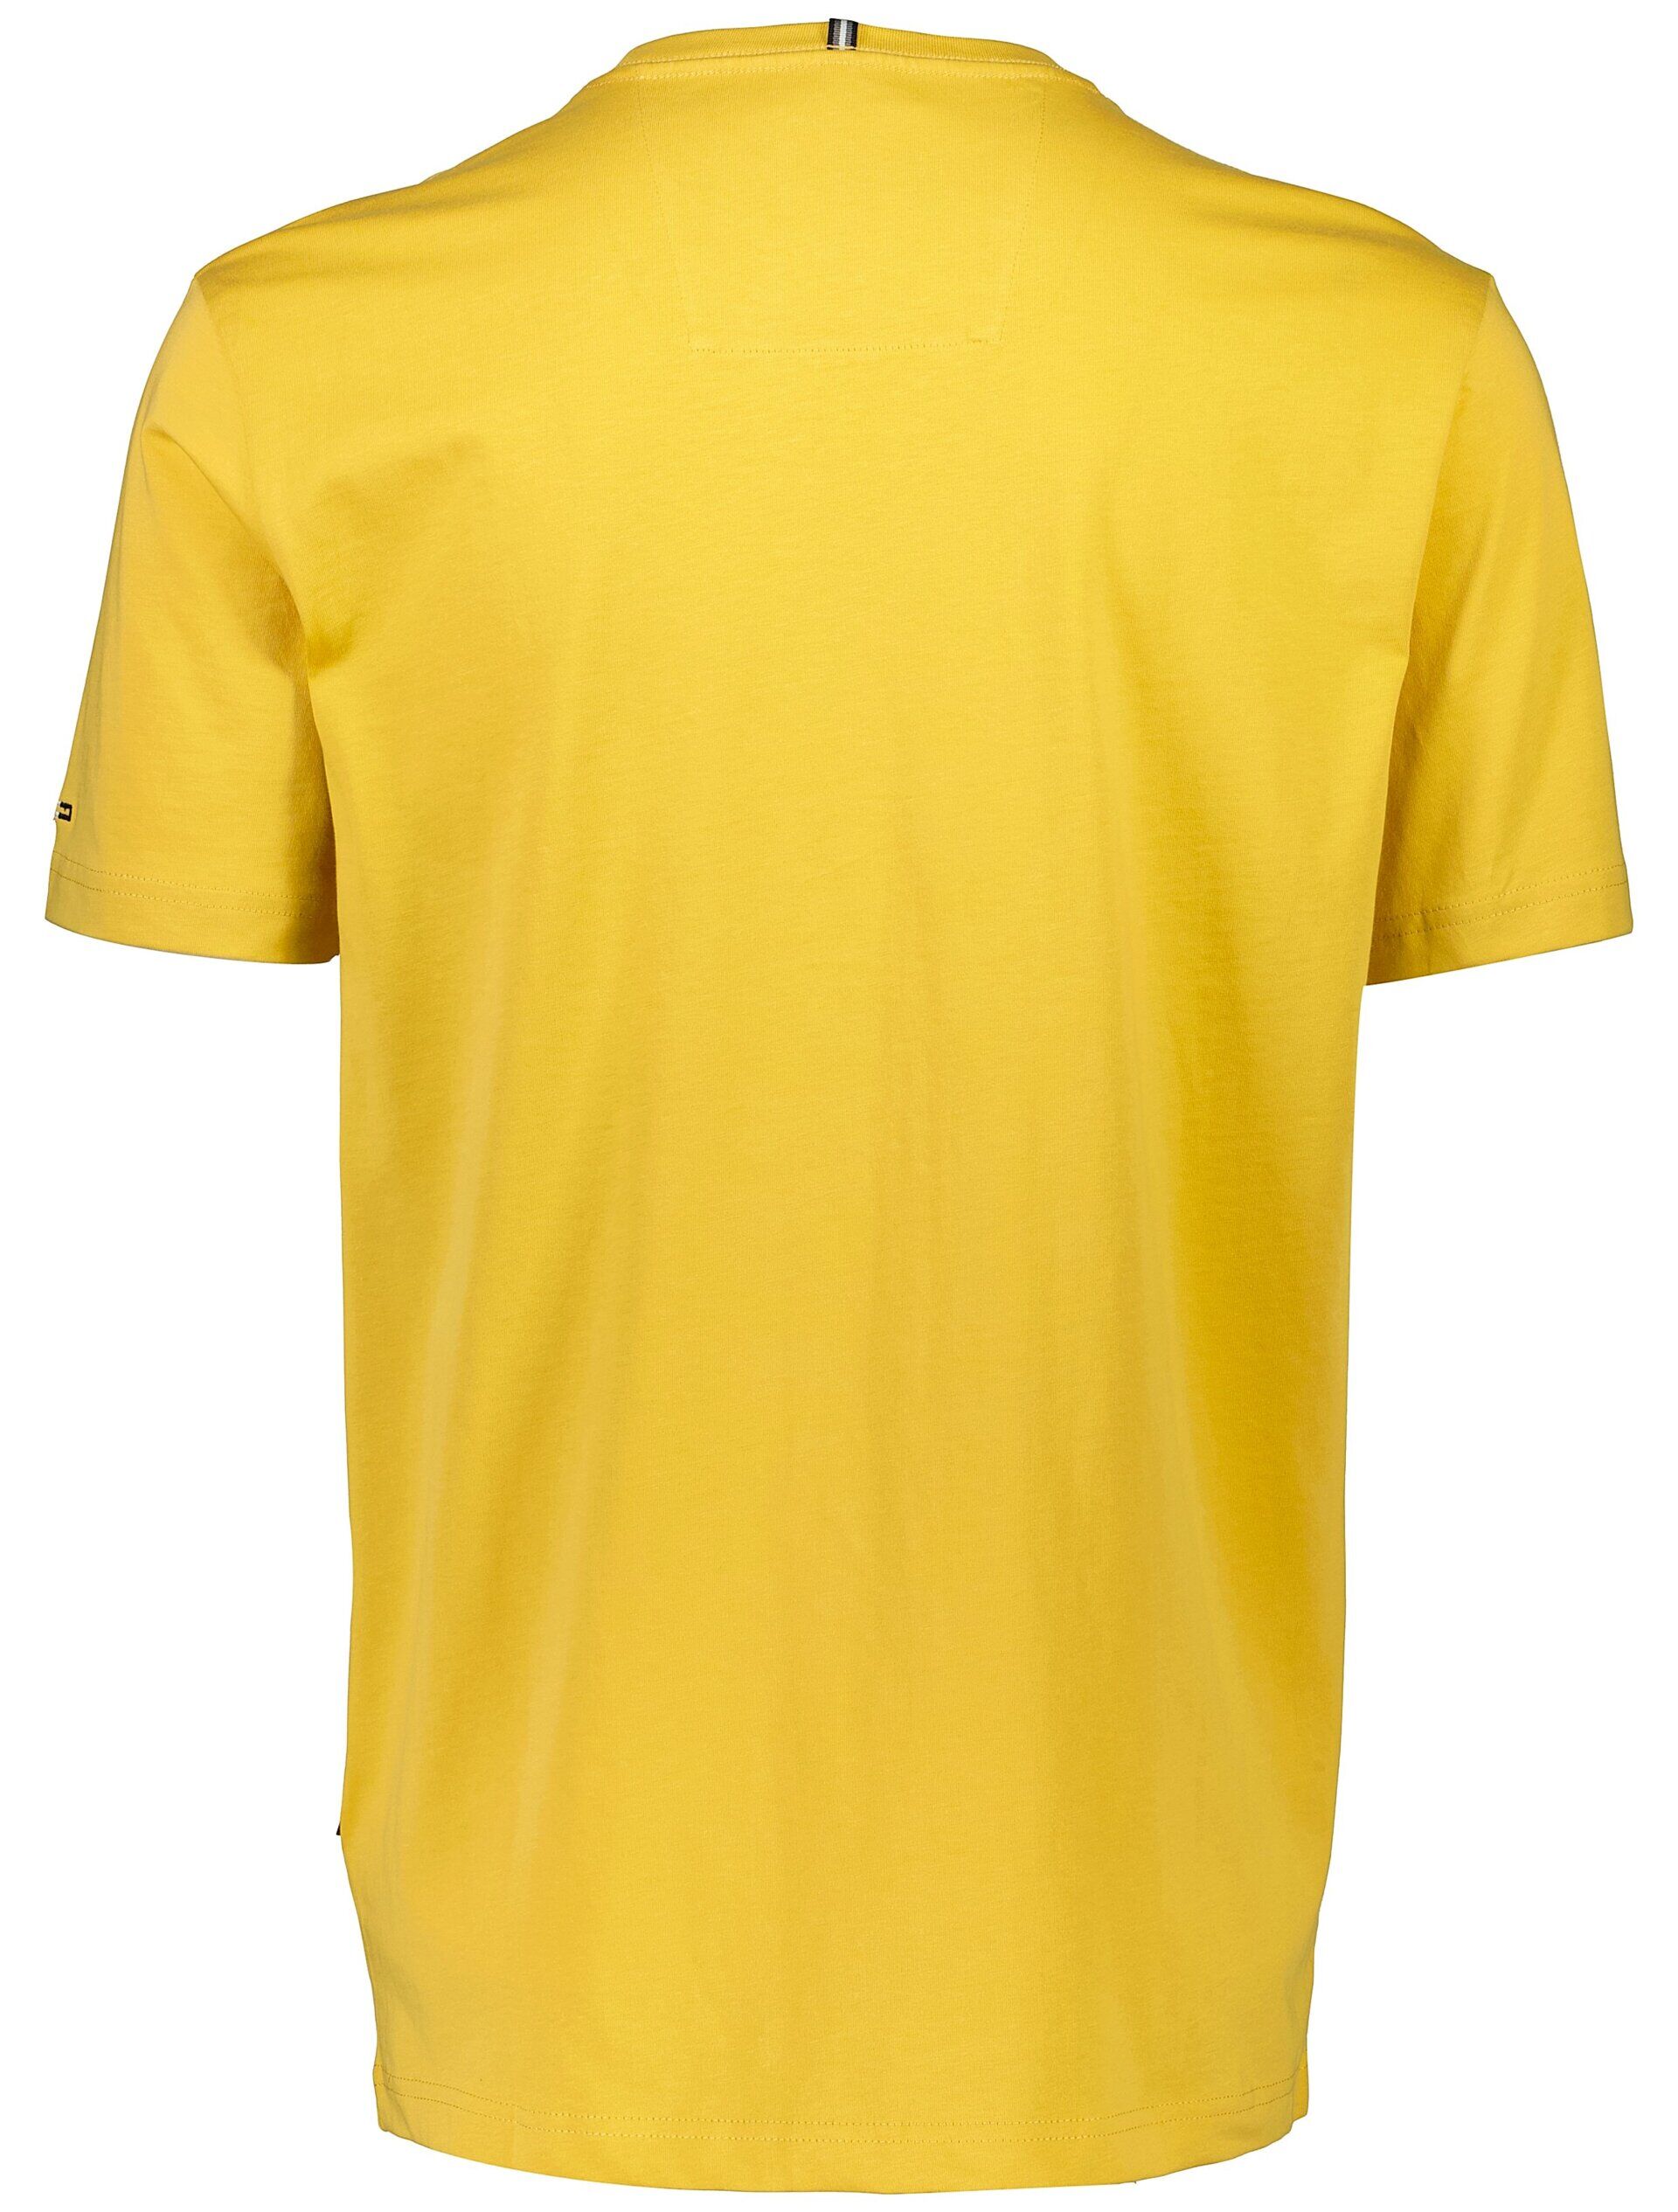 Bison  T-shirt 80-400115APLUS